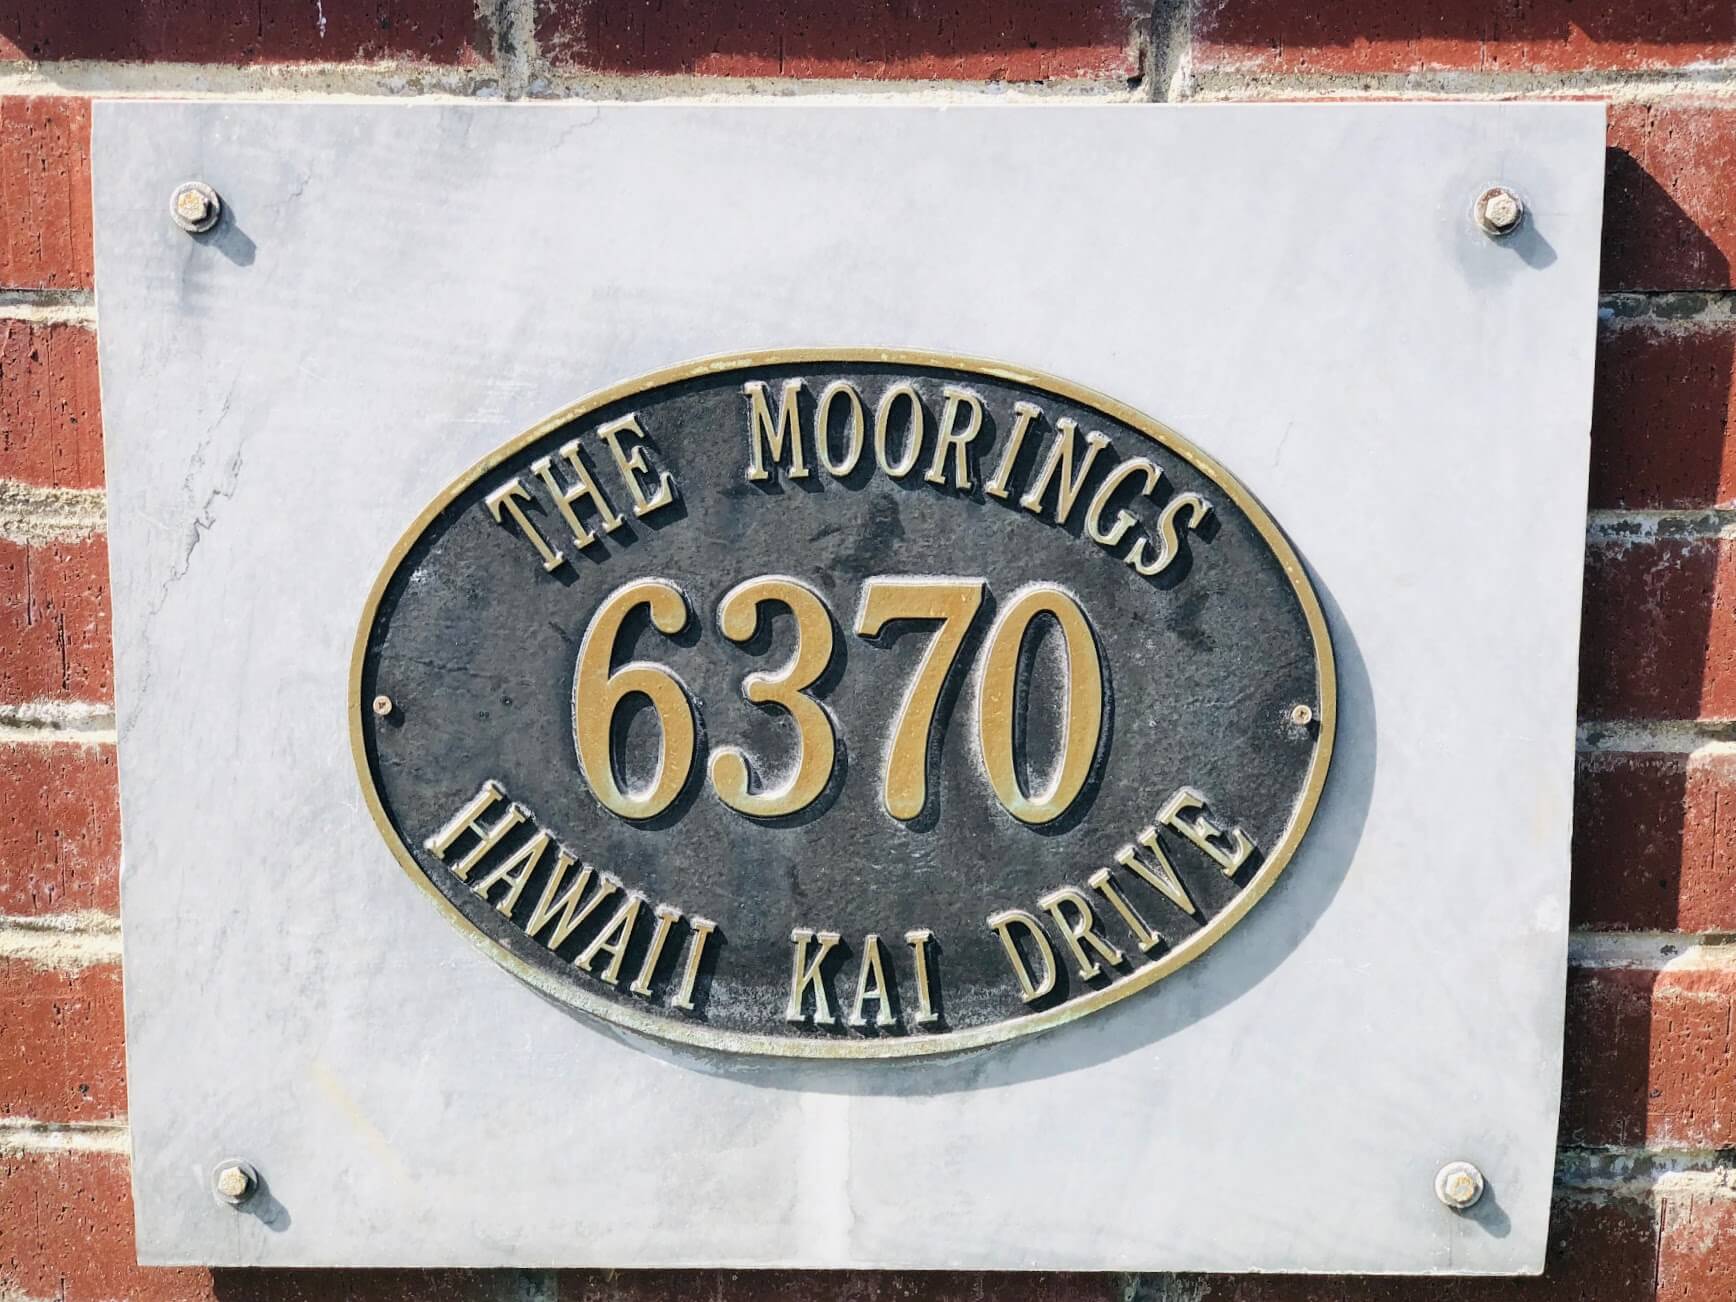 The Mooringsの看板